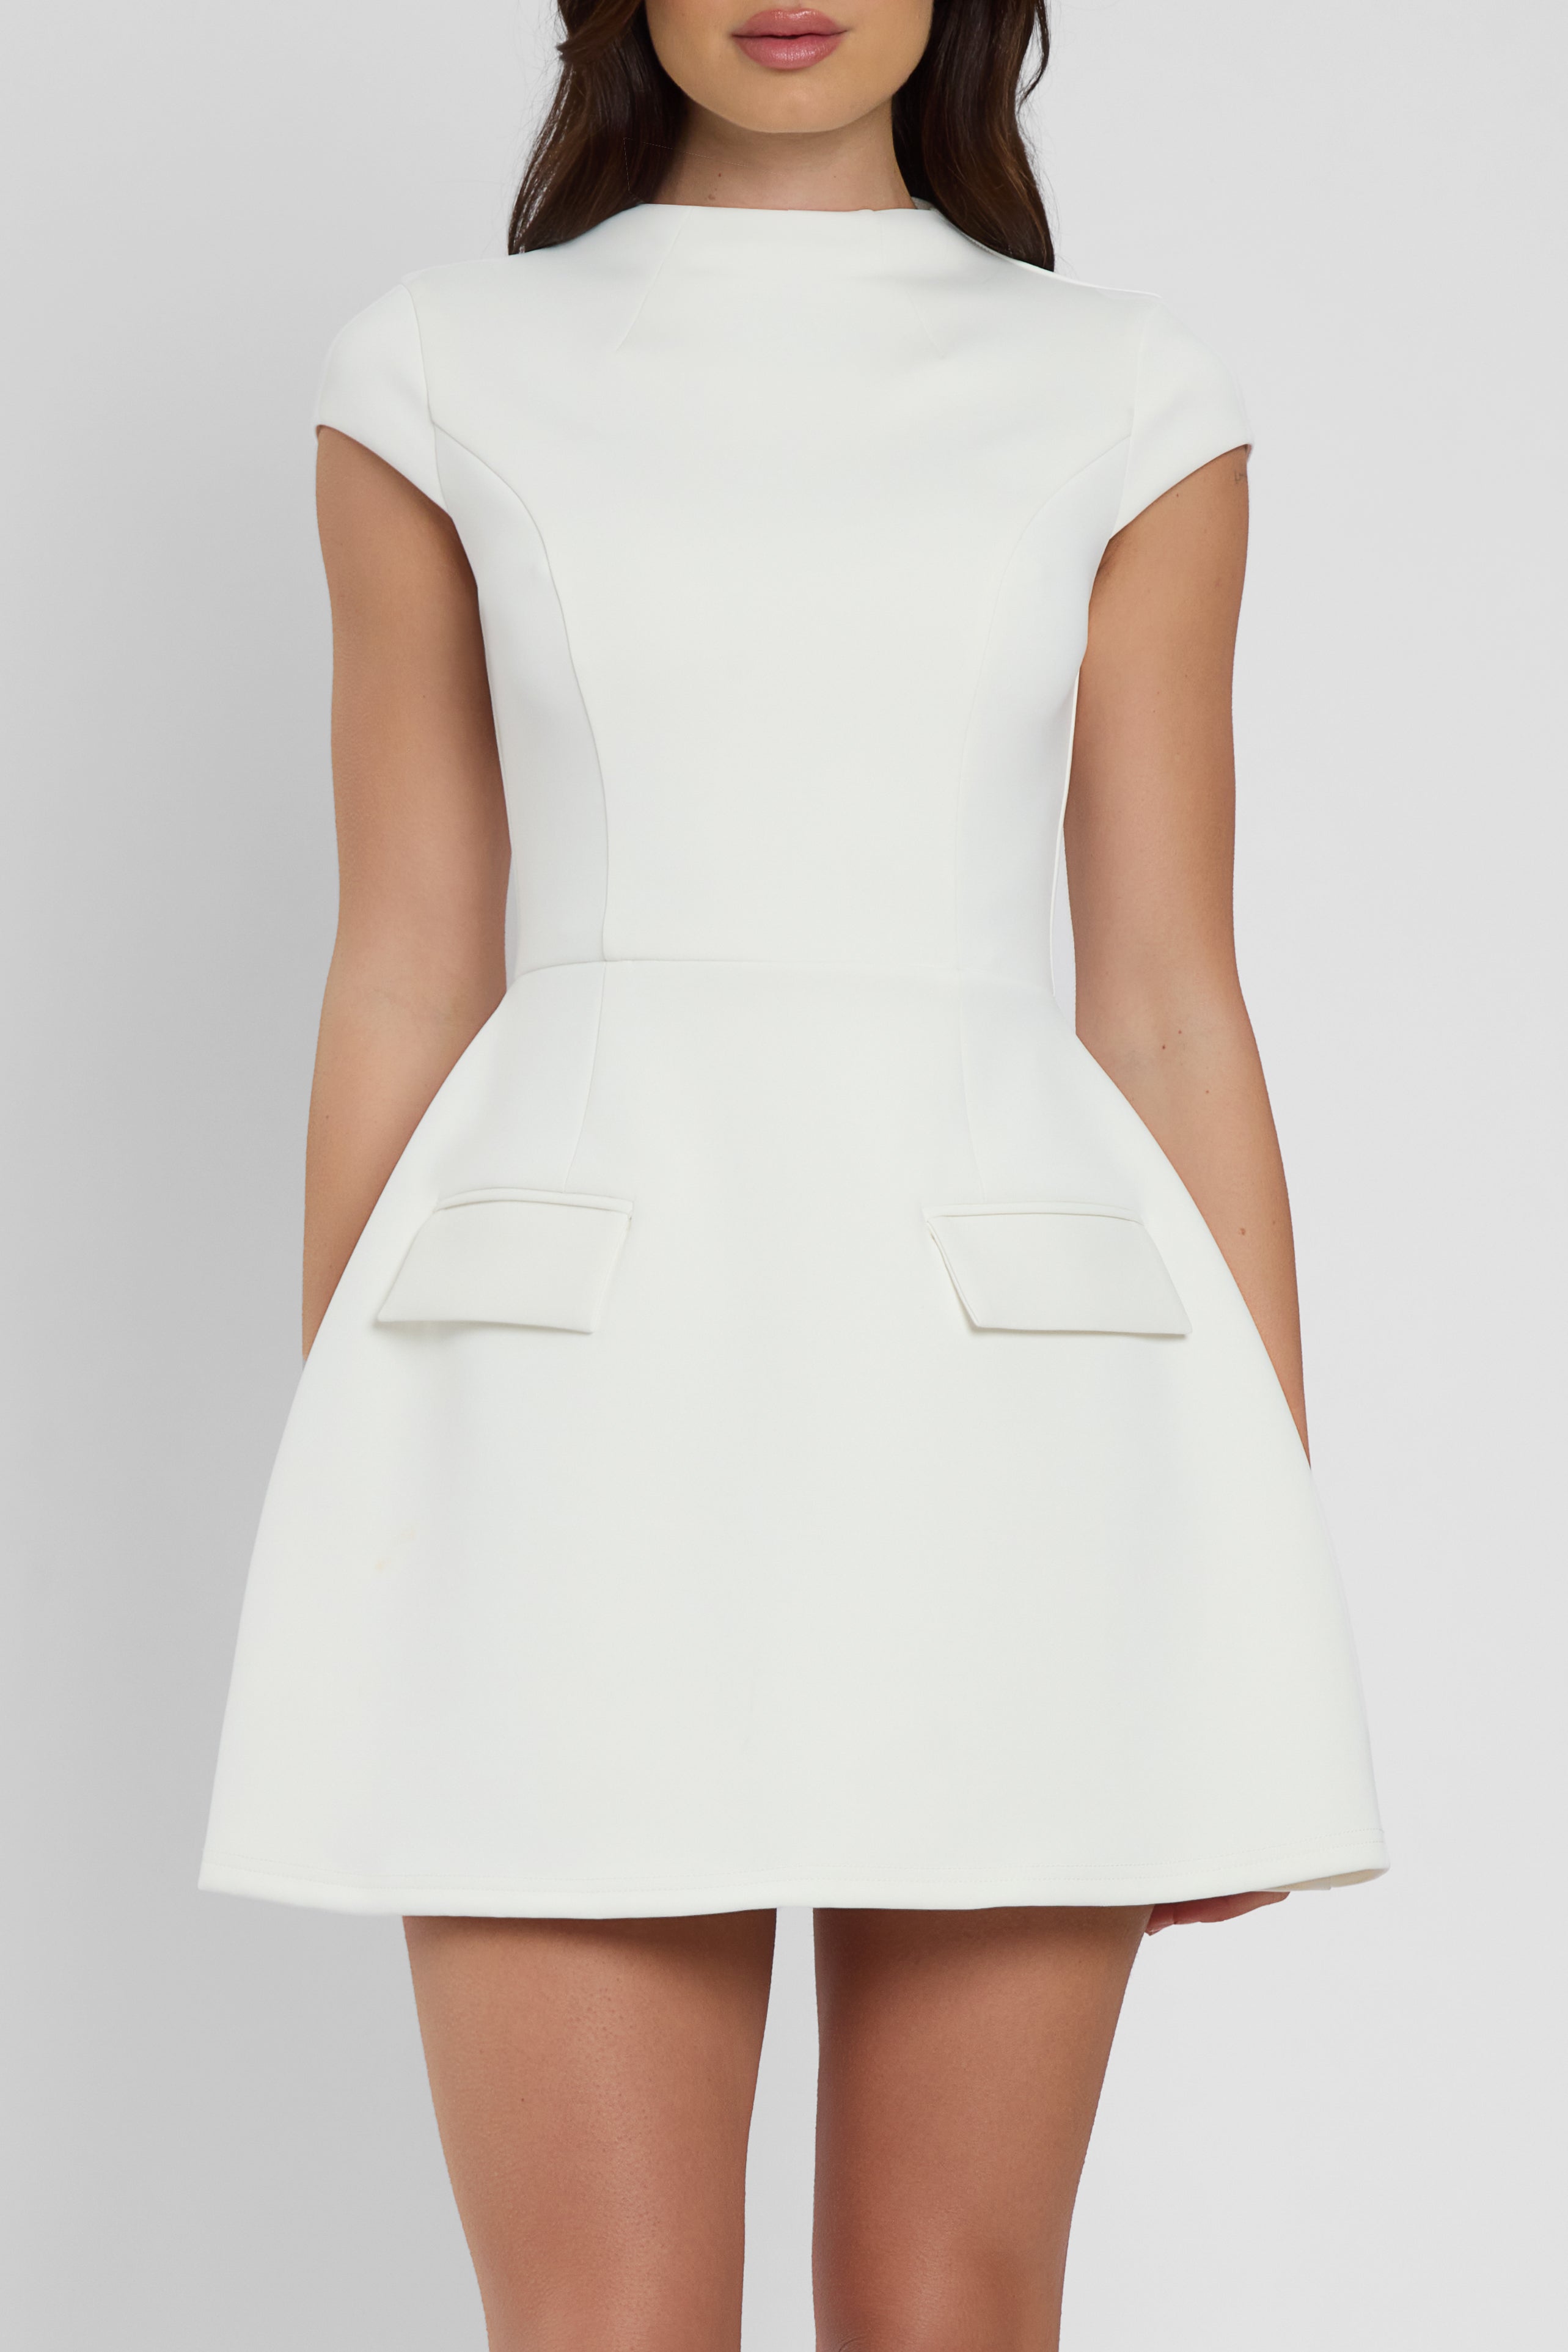 Cote Cap Sleeve Pocket Mini Dress - White